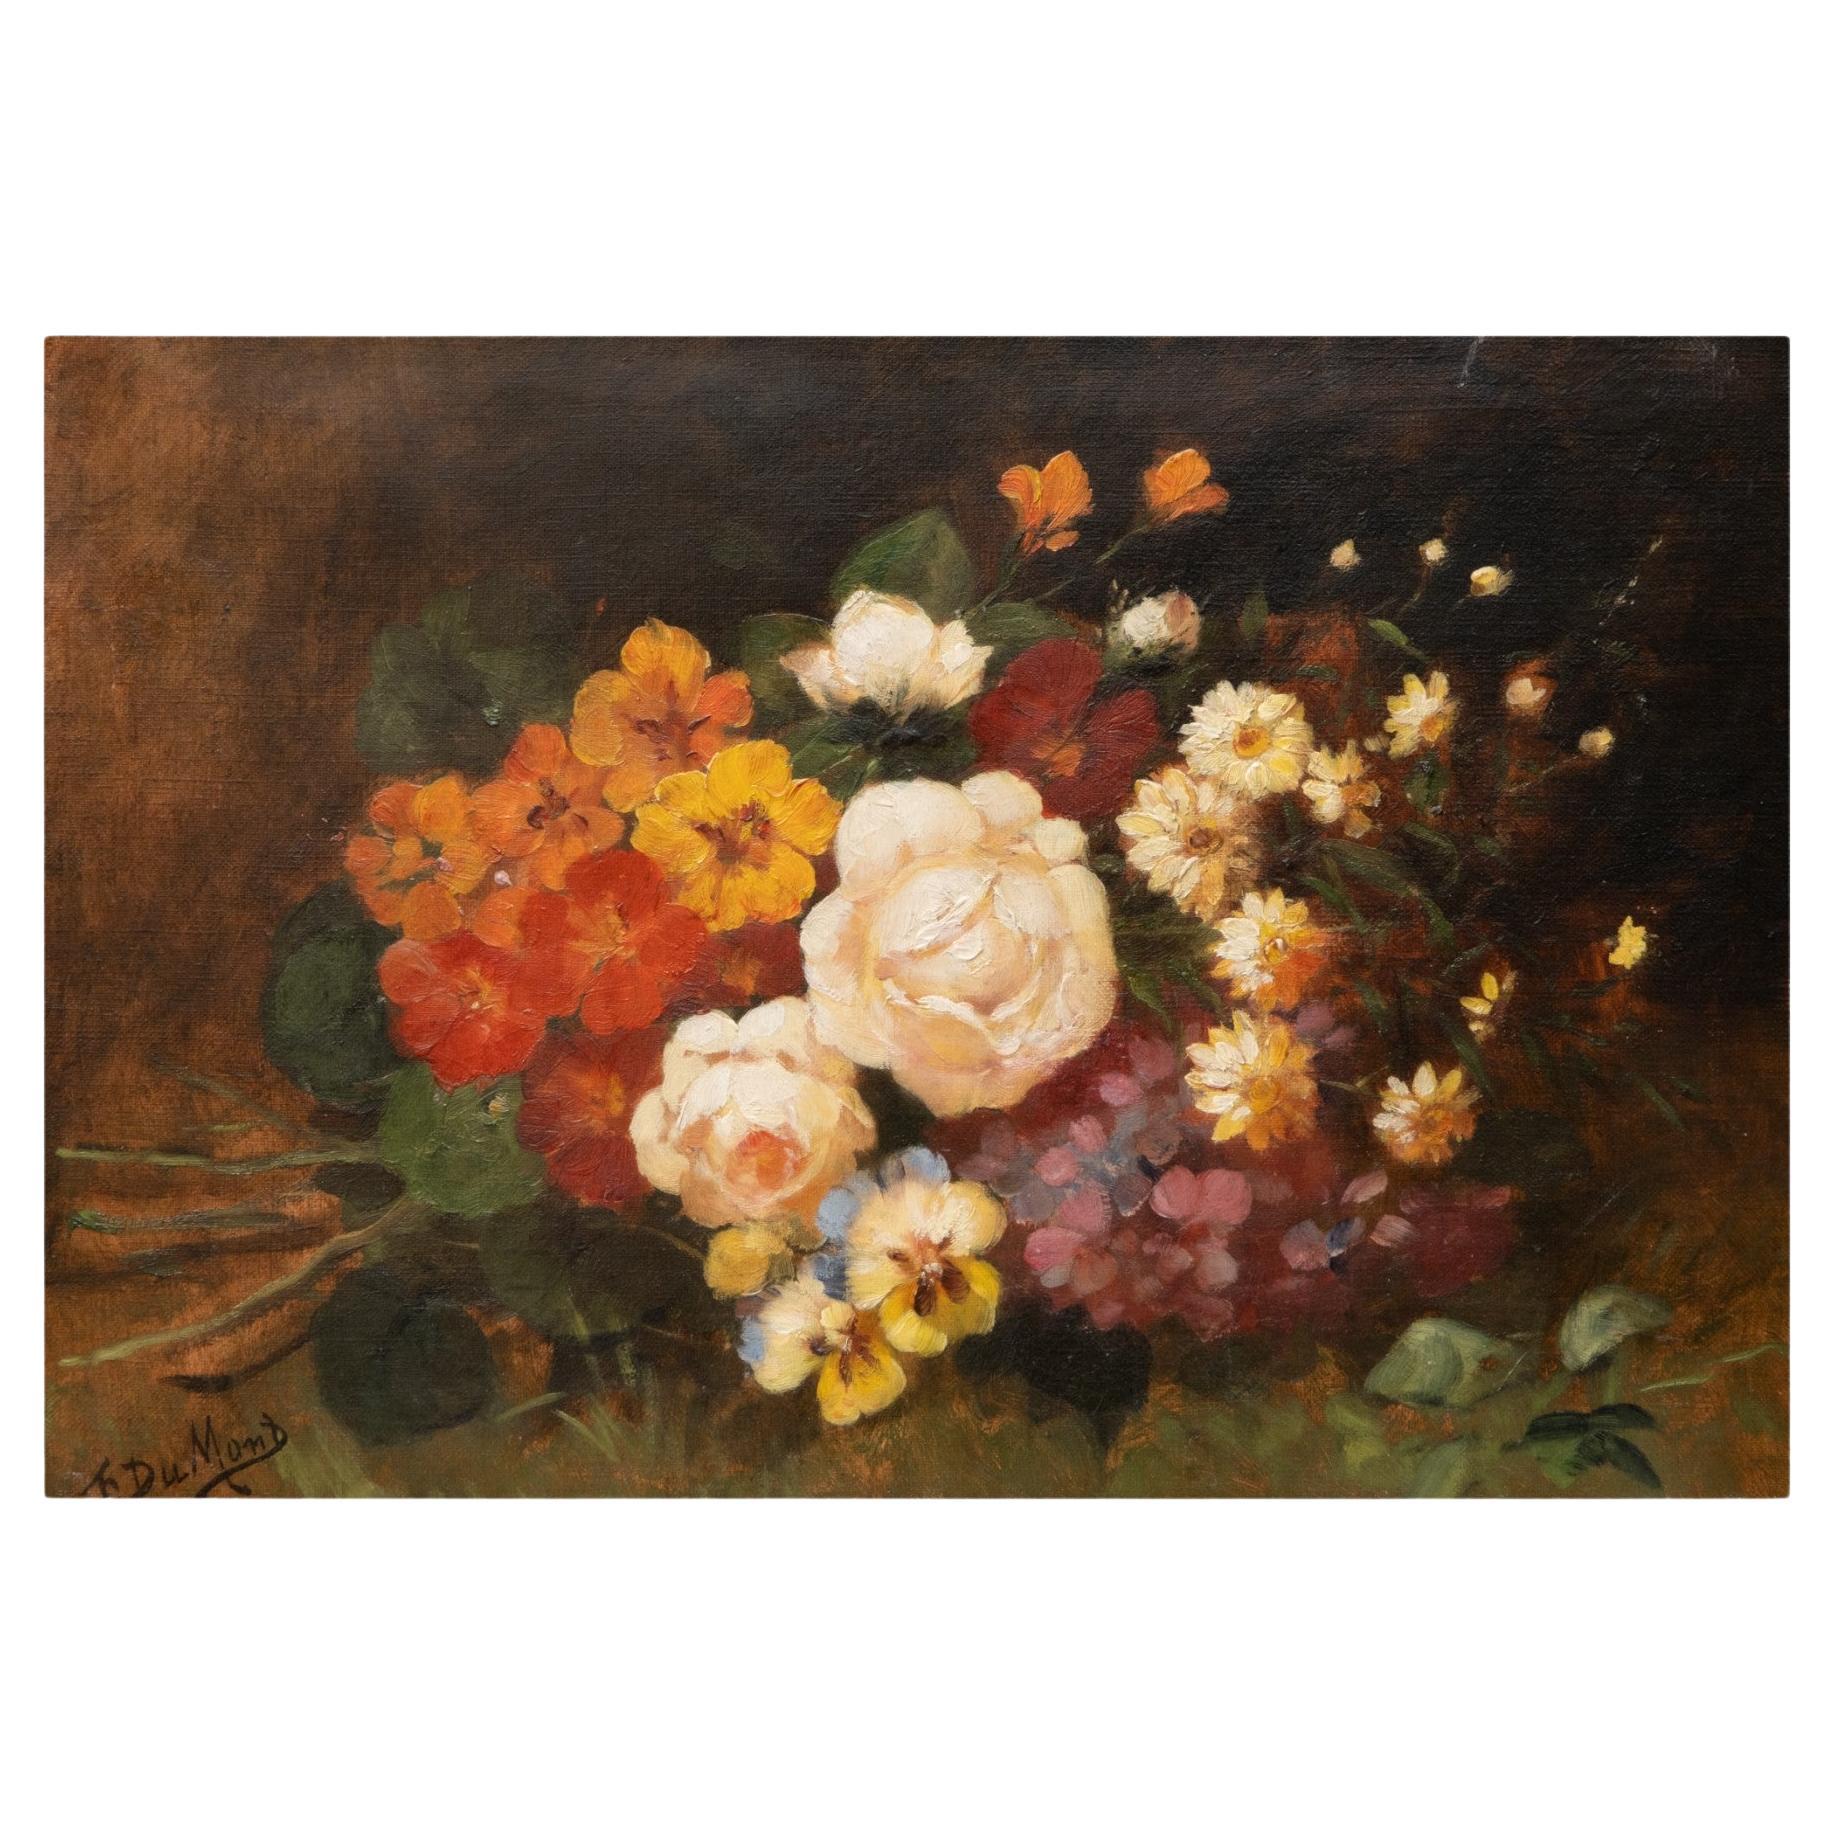 Signed François Dumont Oil on Canvas Painting